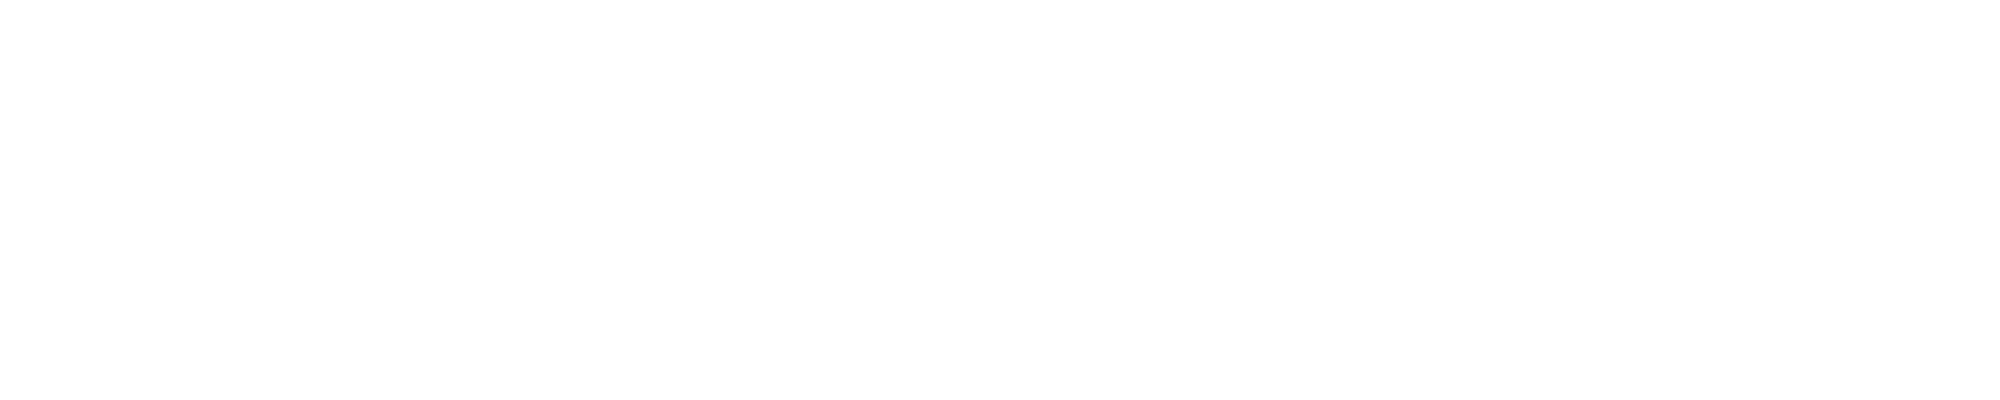 The Fat Crab Harrow